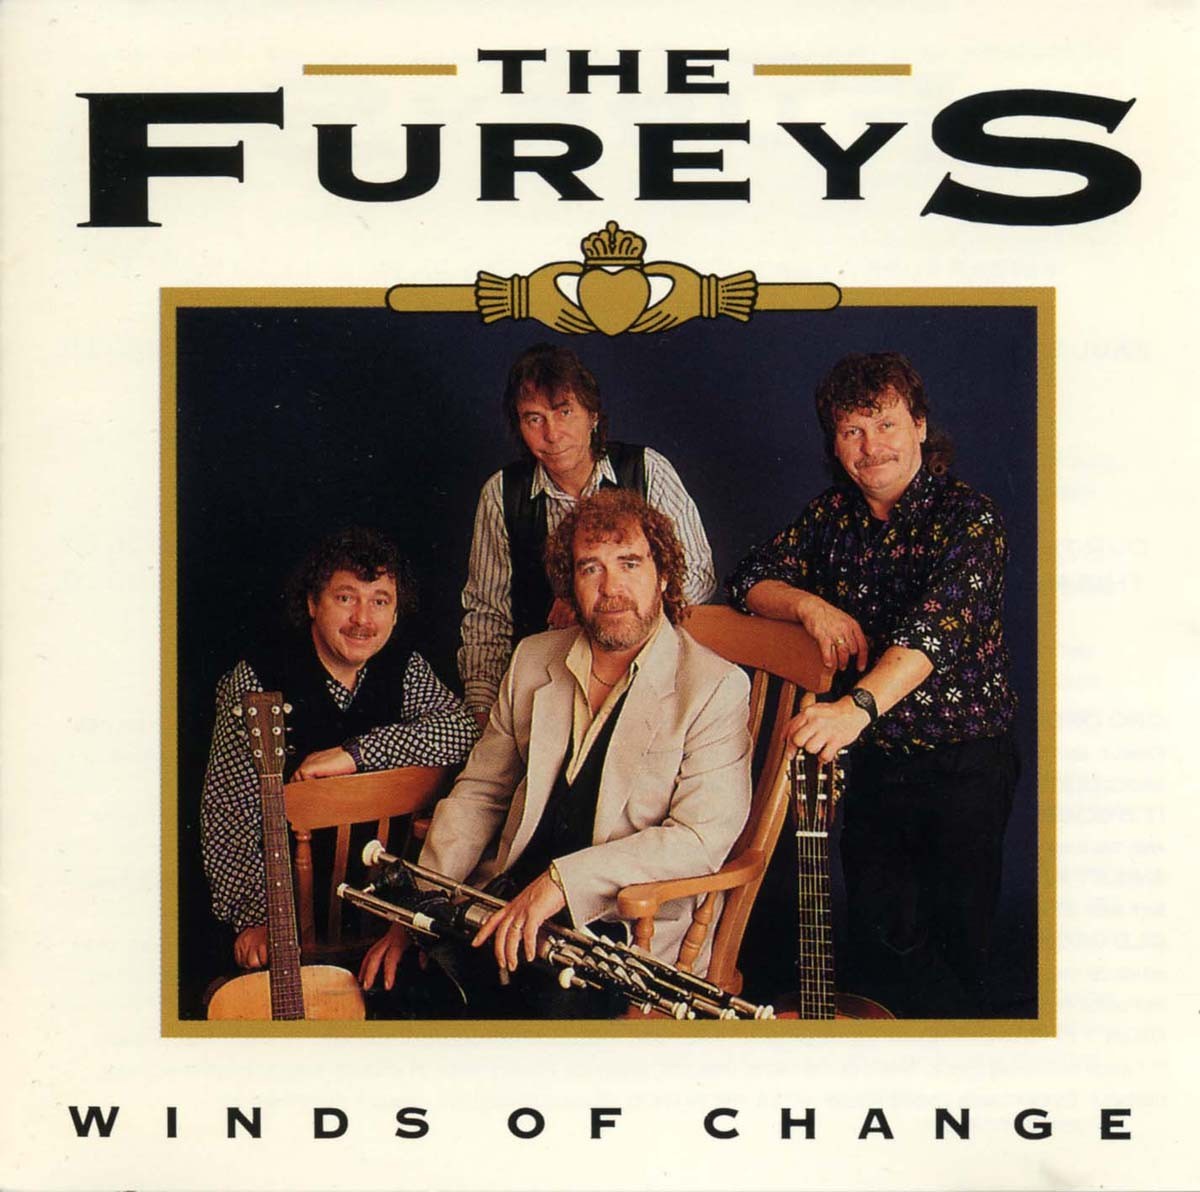 The FUREYS - Winds of Change